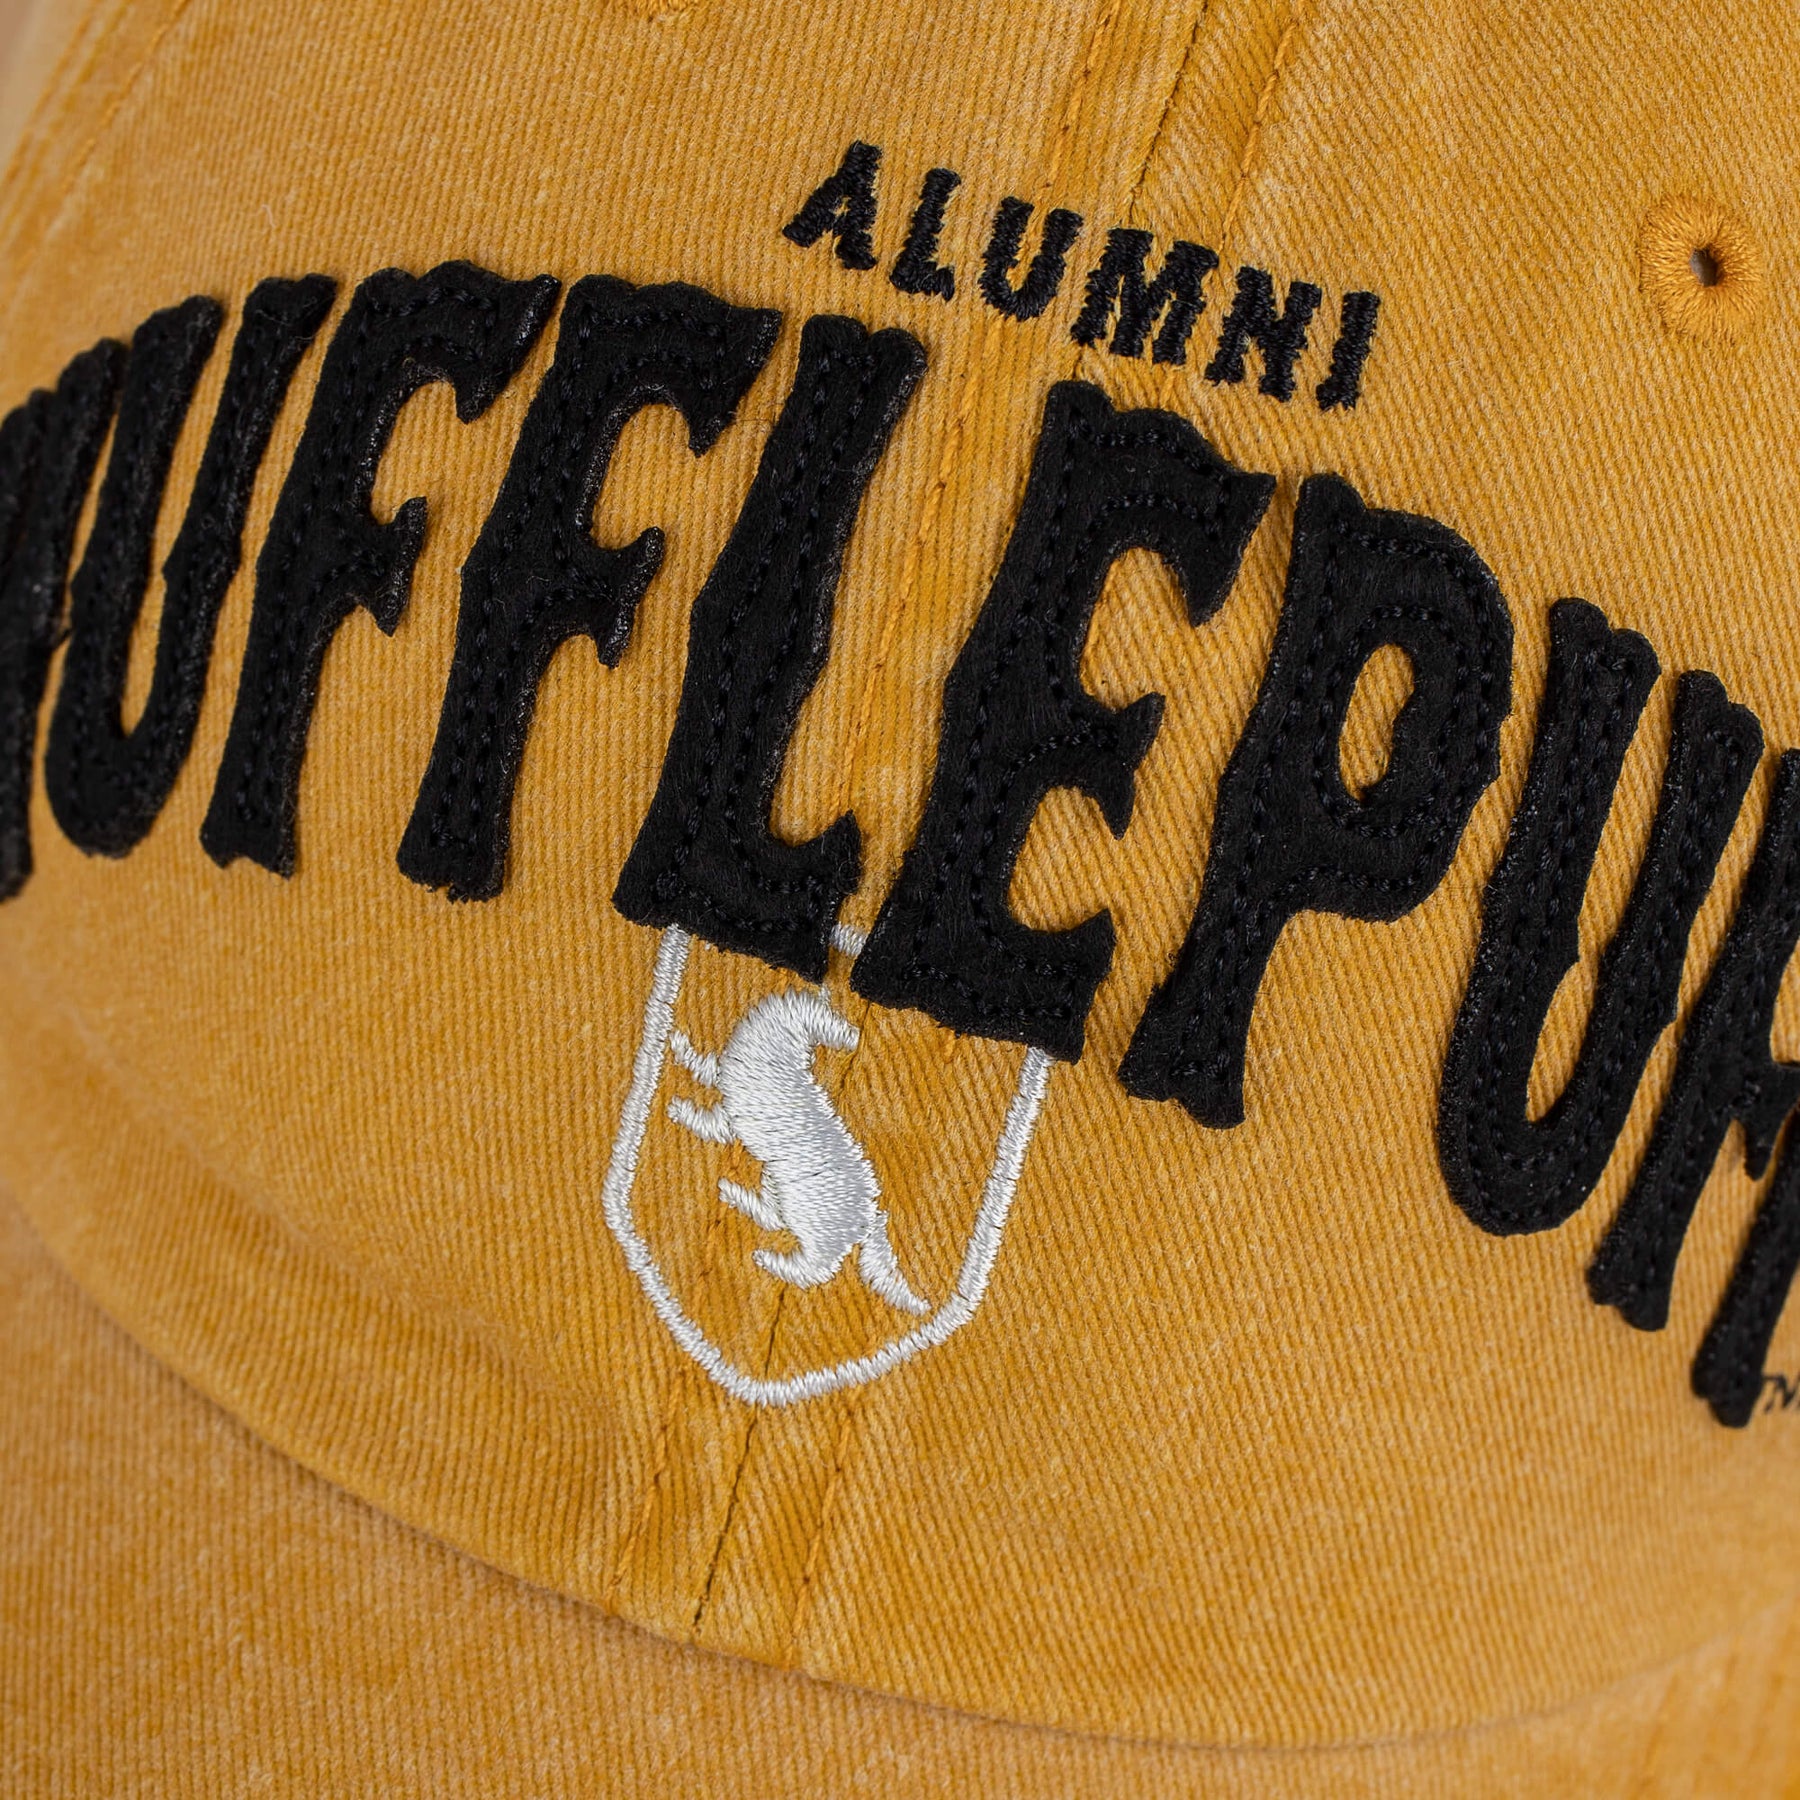 Harry Potter Hufflepuff Alumni Adjustable Adults Cap